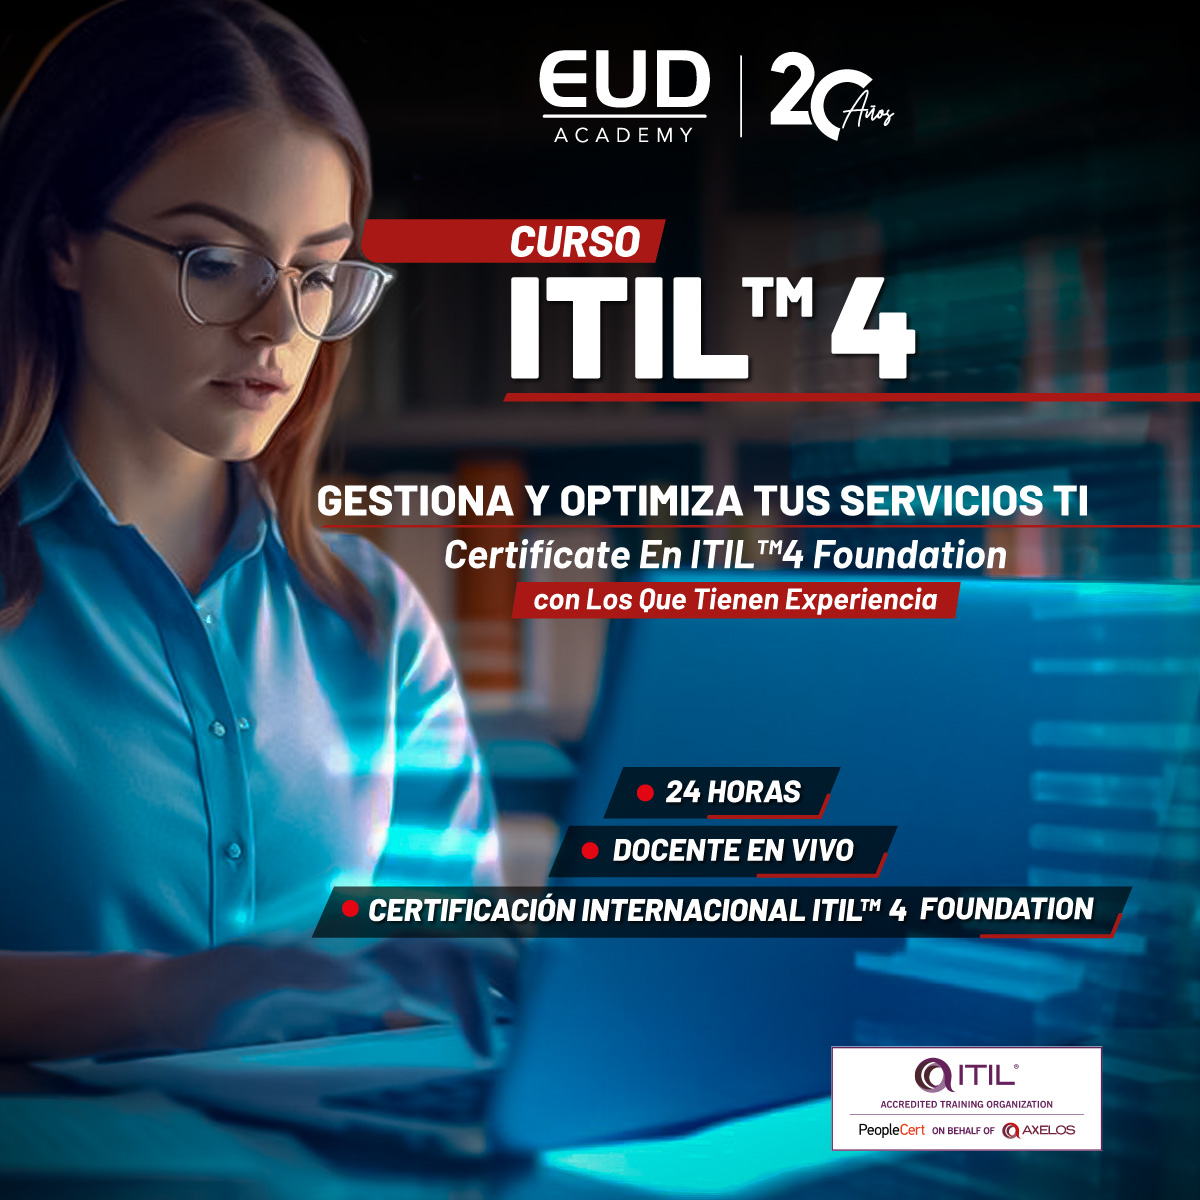 ITIL en EUD Academy